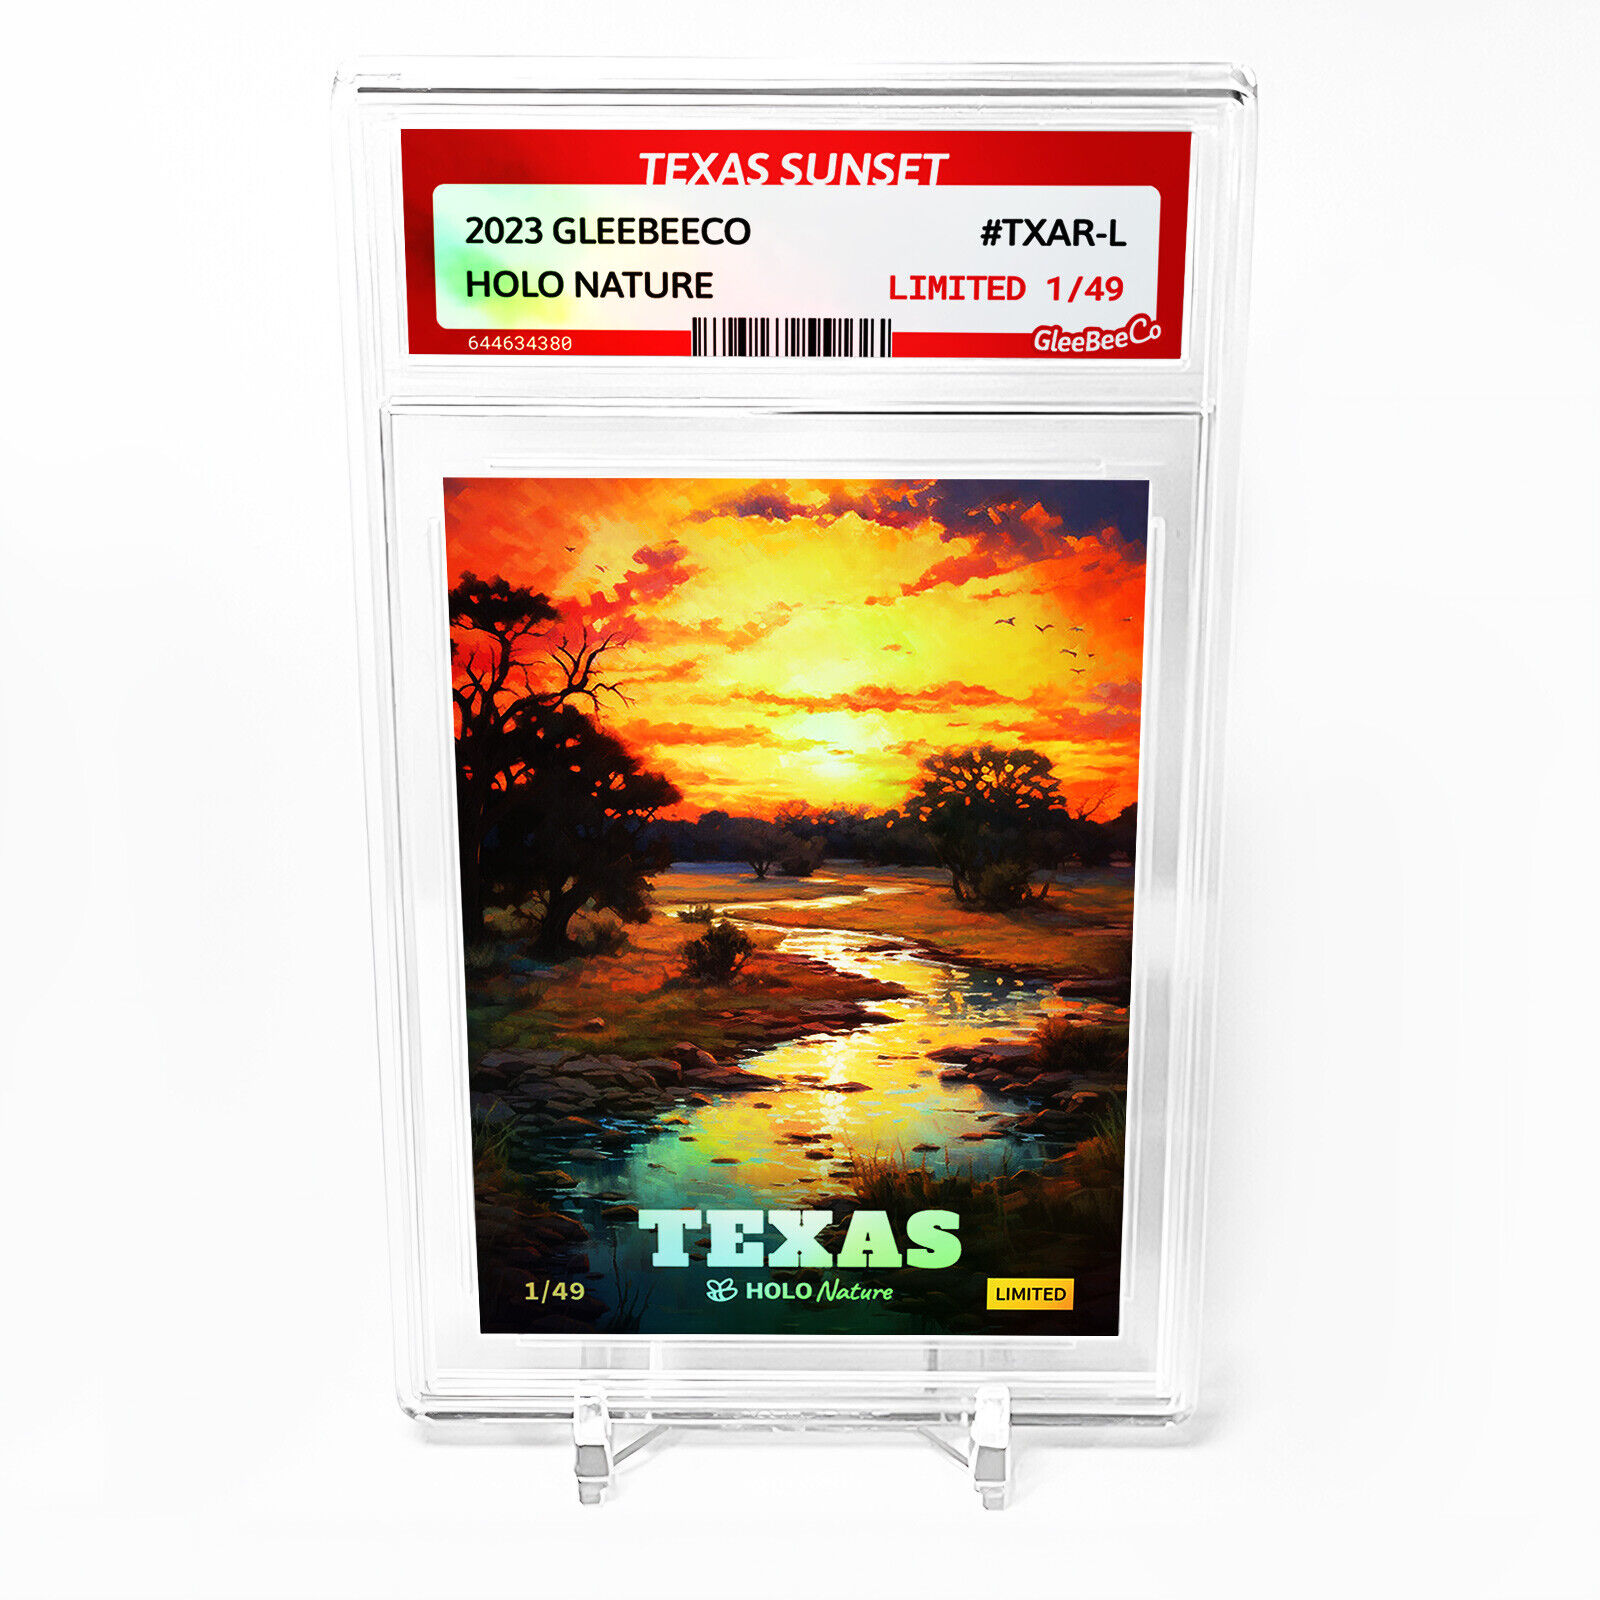 TEXAS SUNSET Texas Card 2023 GleeBeeCo America the Beautiful Holo #TXAR-L /49